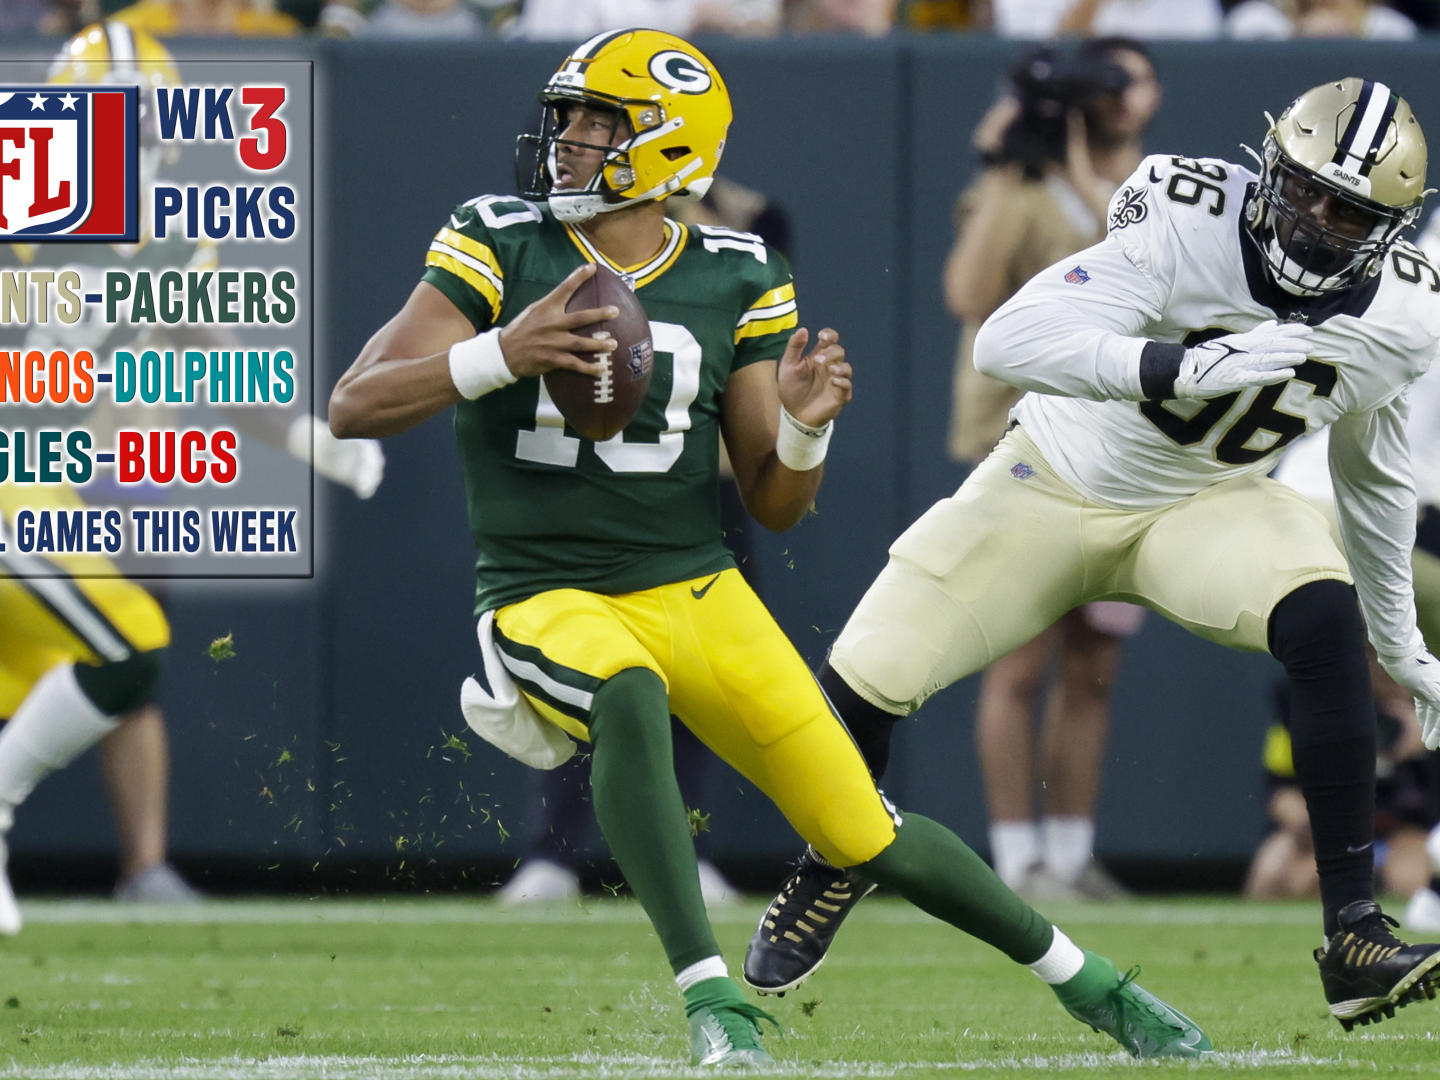 NFL Week 3 Picks: Saints-Packers, Broncos-Dolphins top list, Sports  Betting